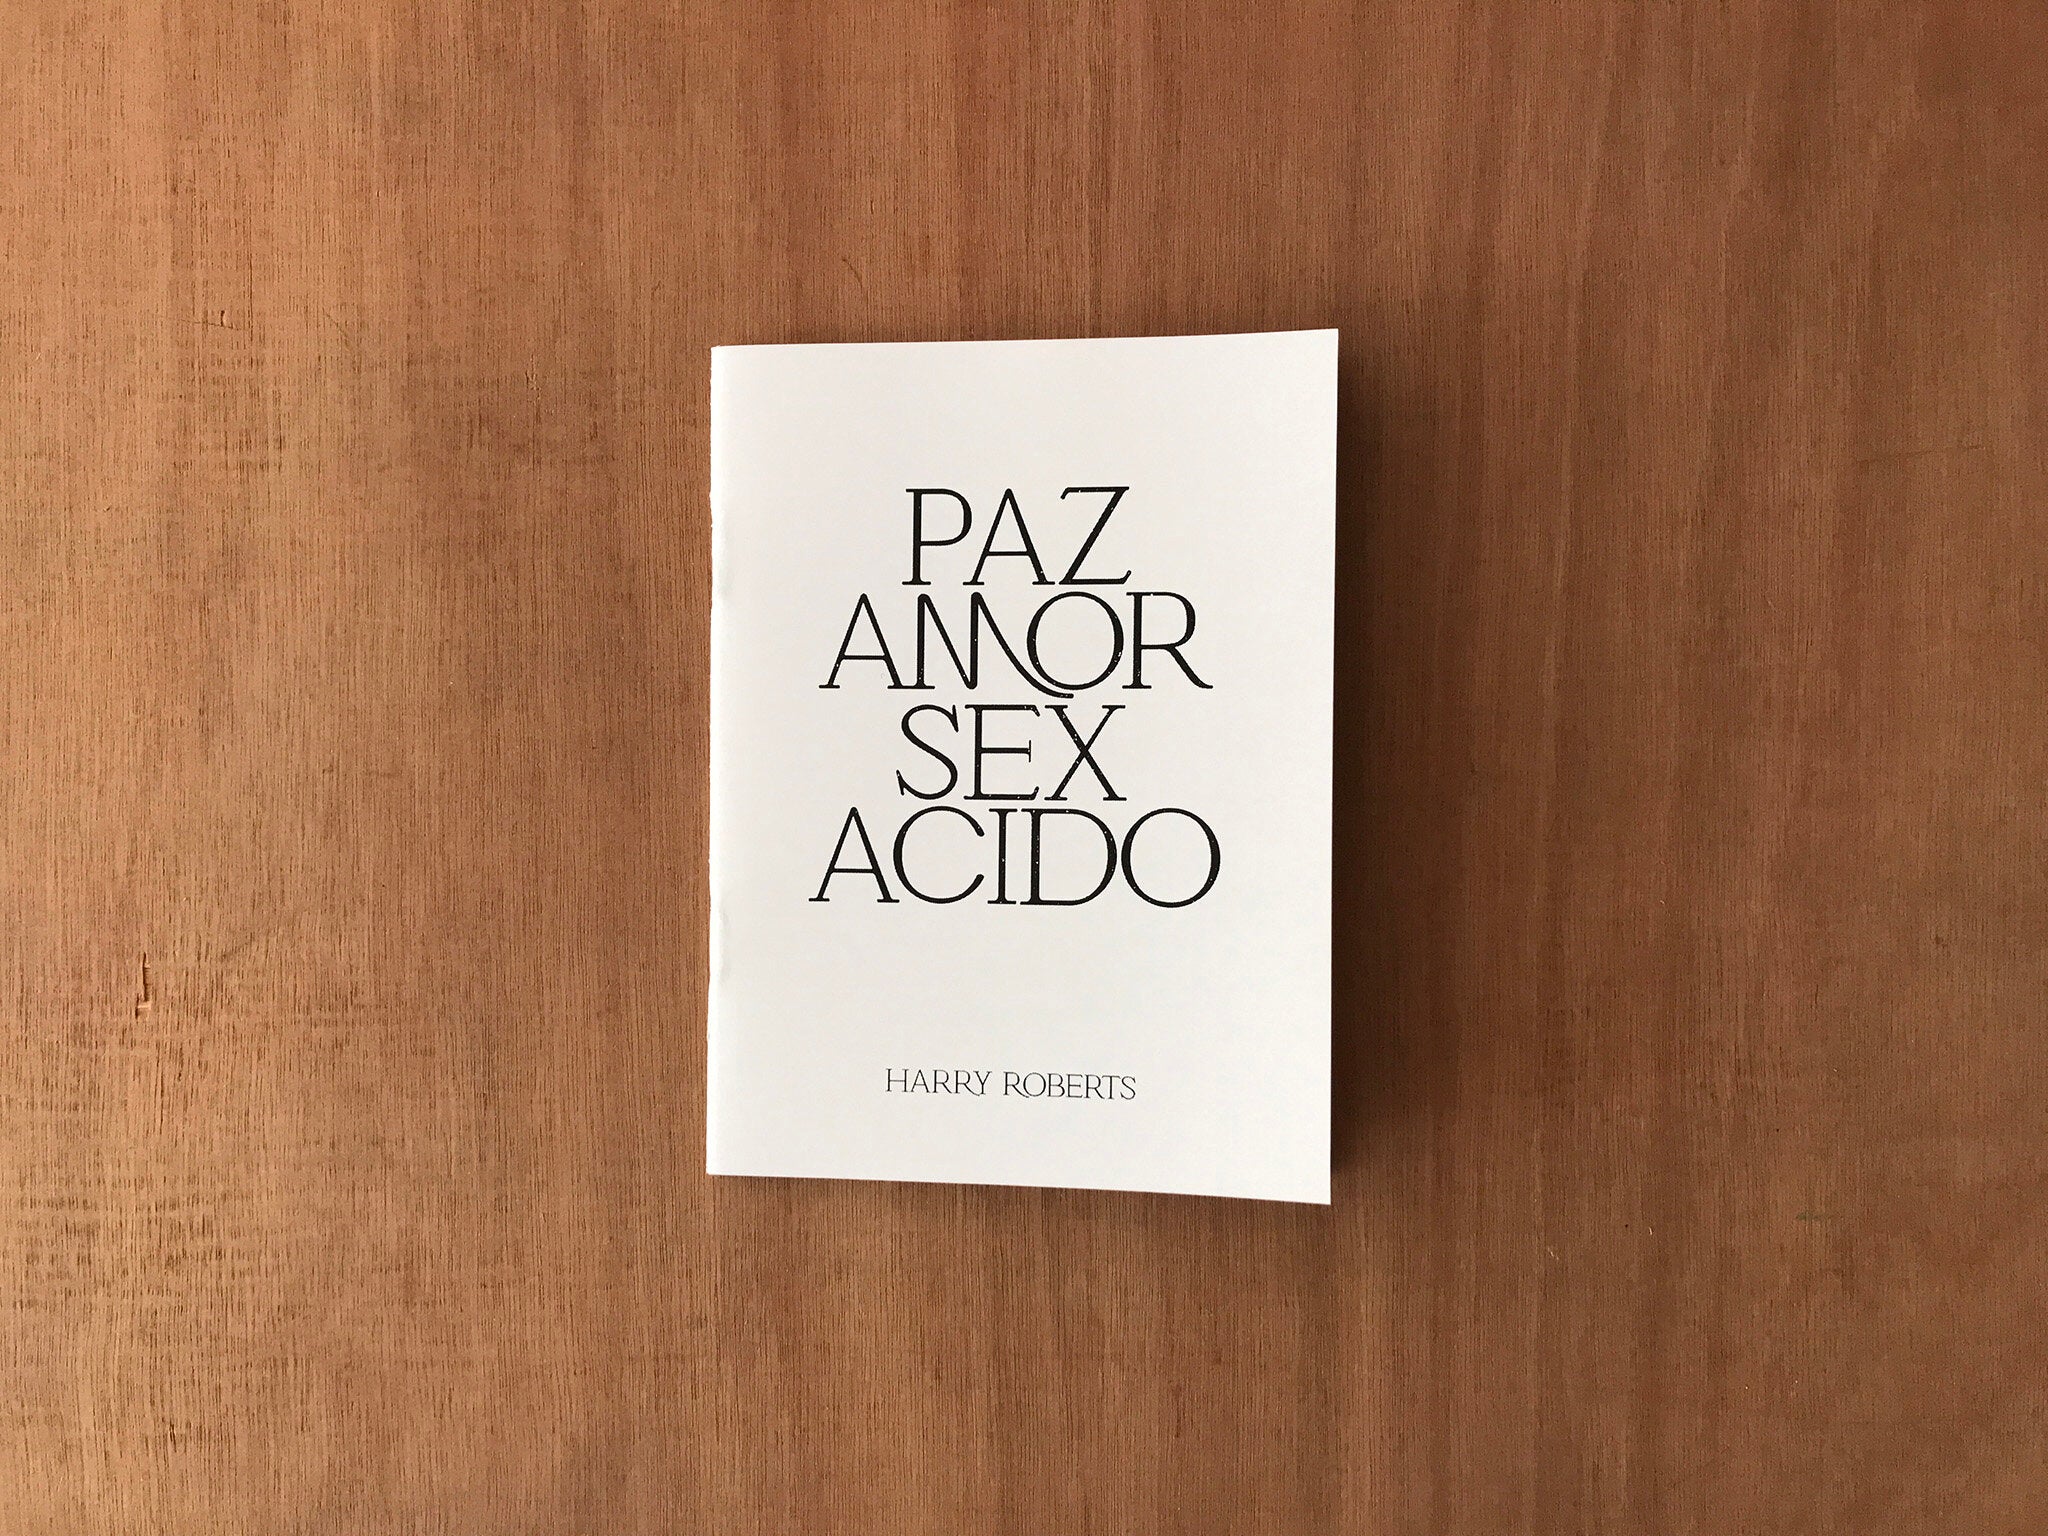 PAZ AMOR SEX ACIDO by Harry Roberts